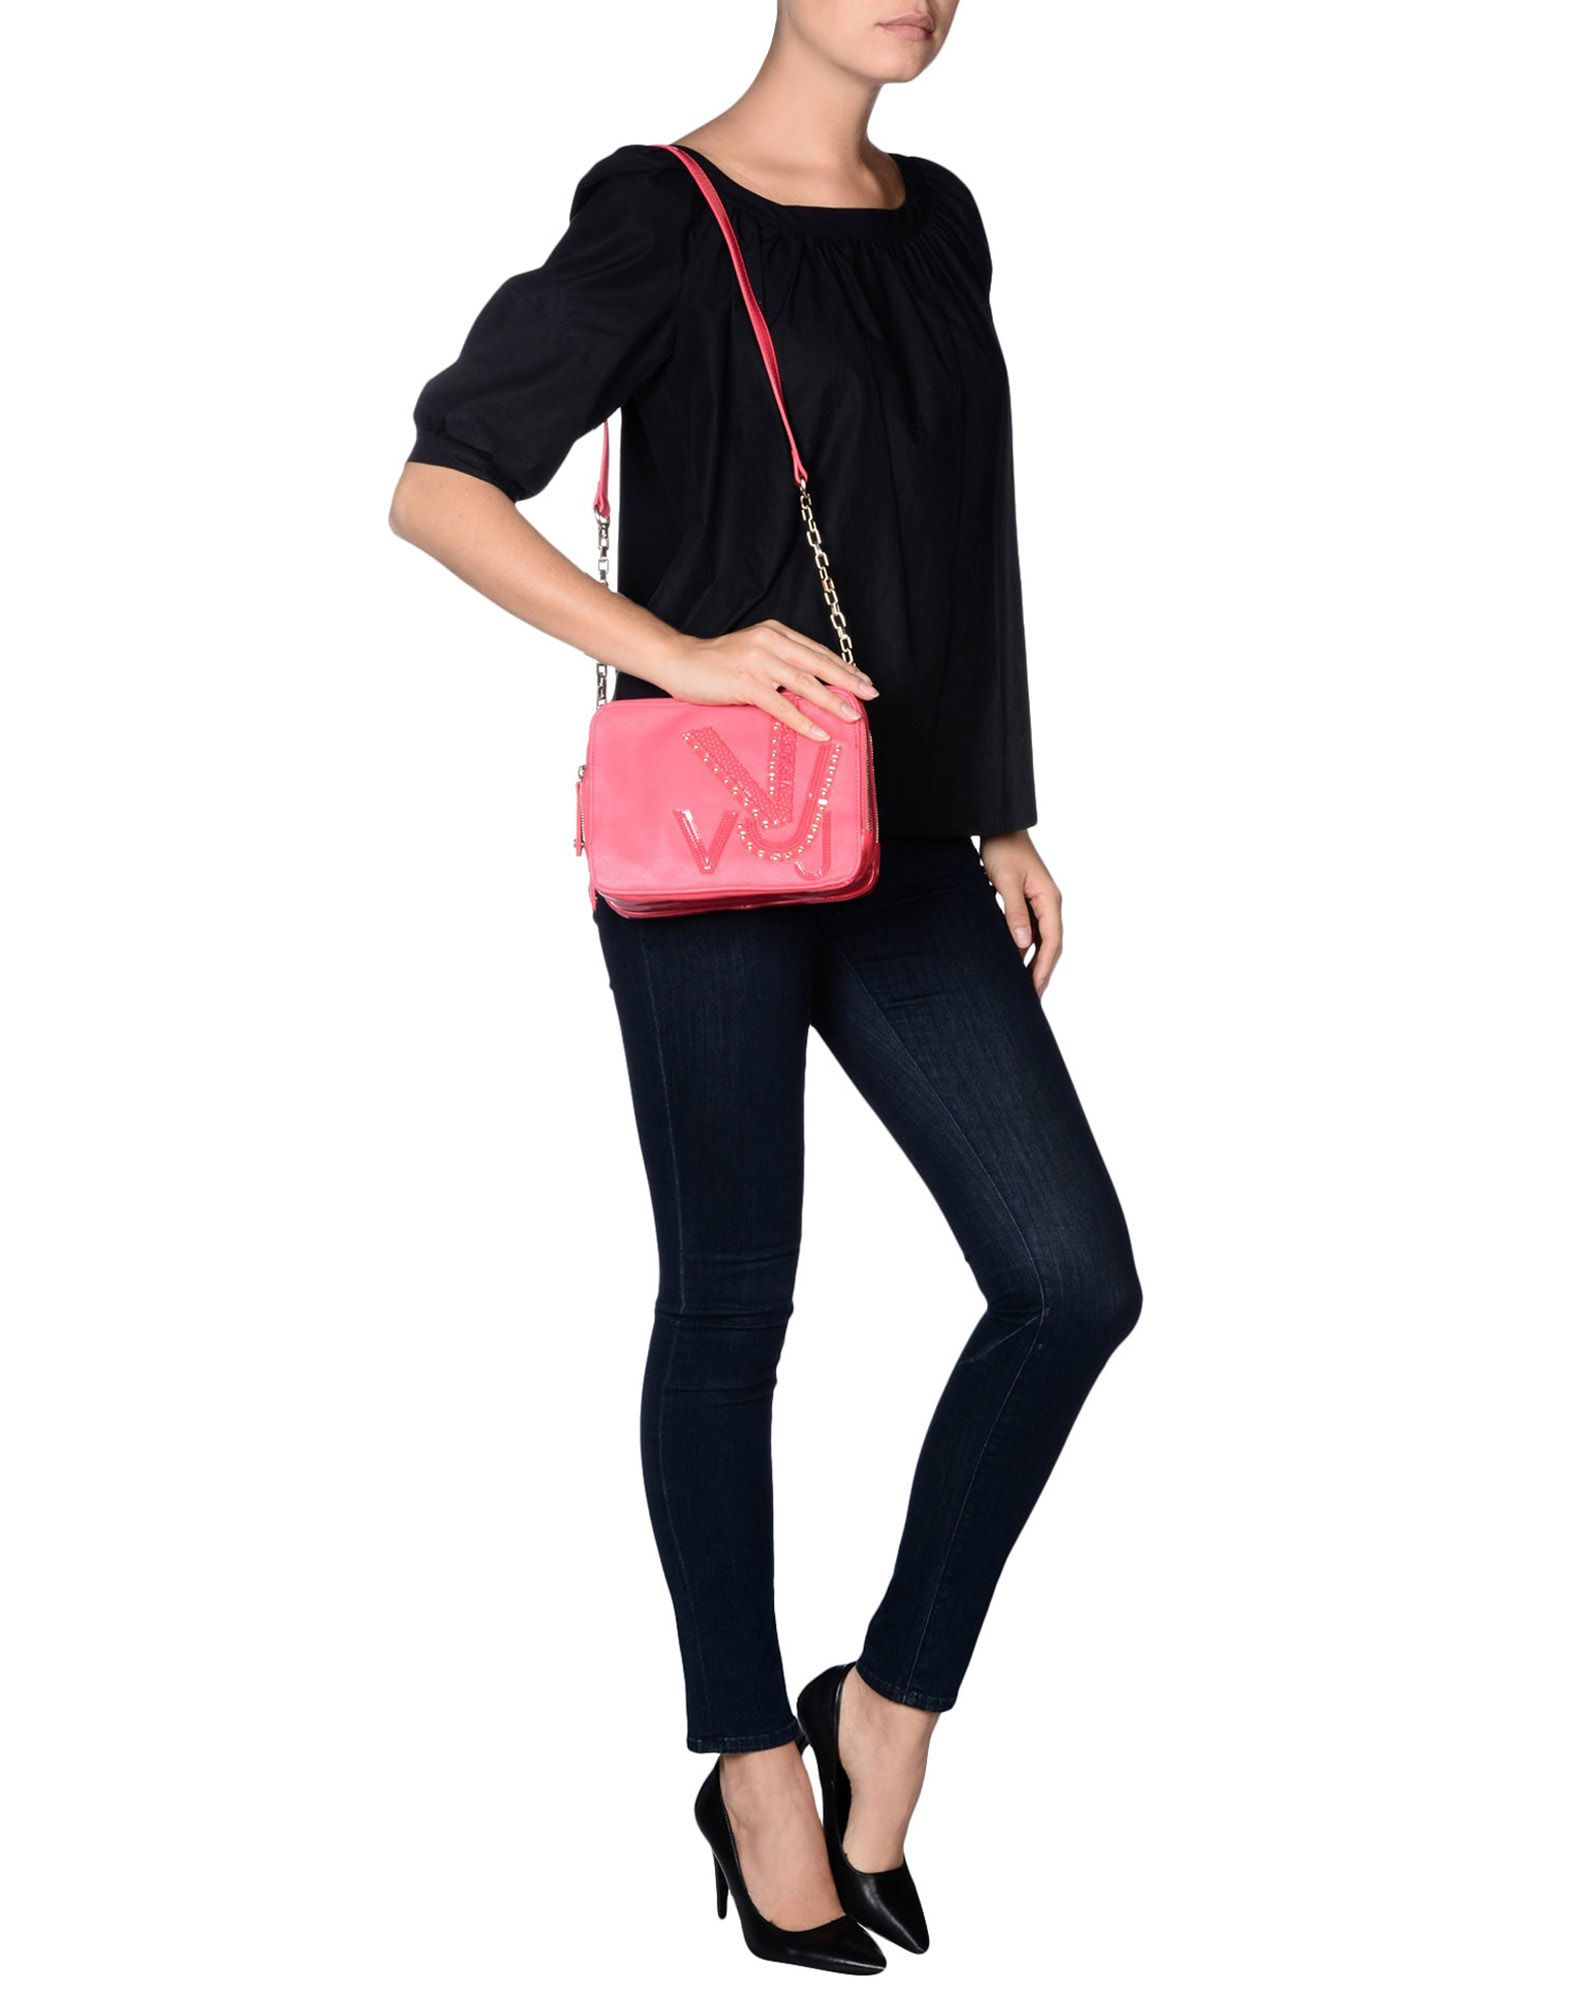 versace jeans pink bag